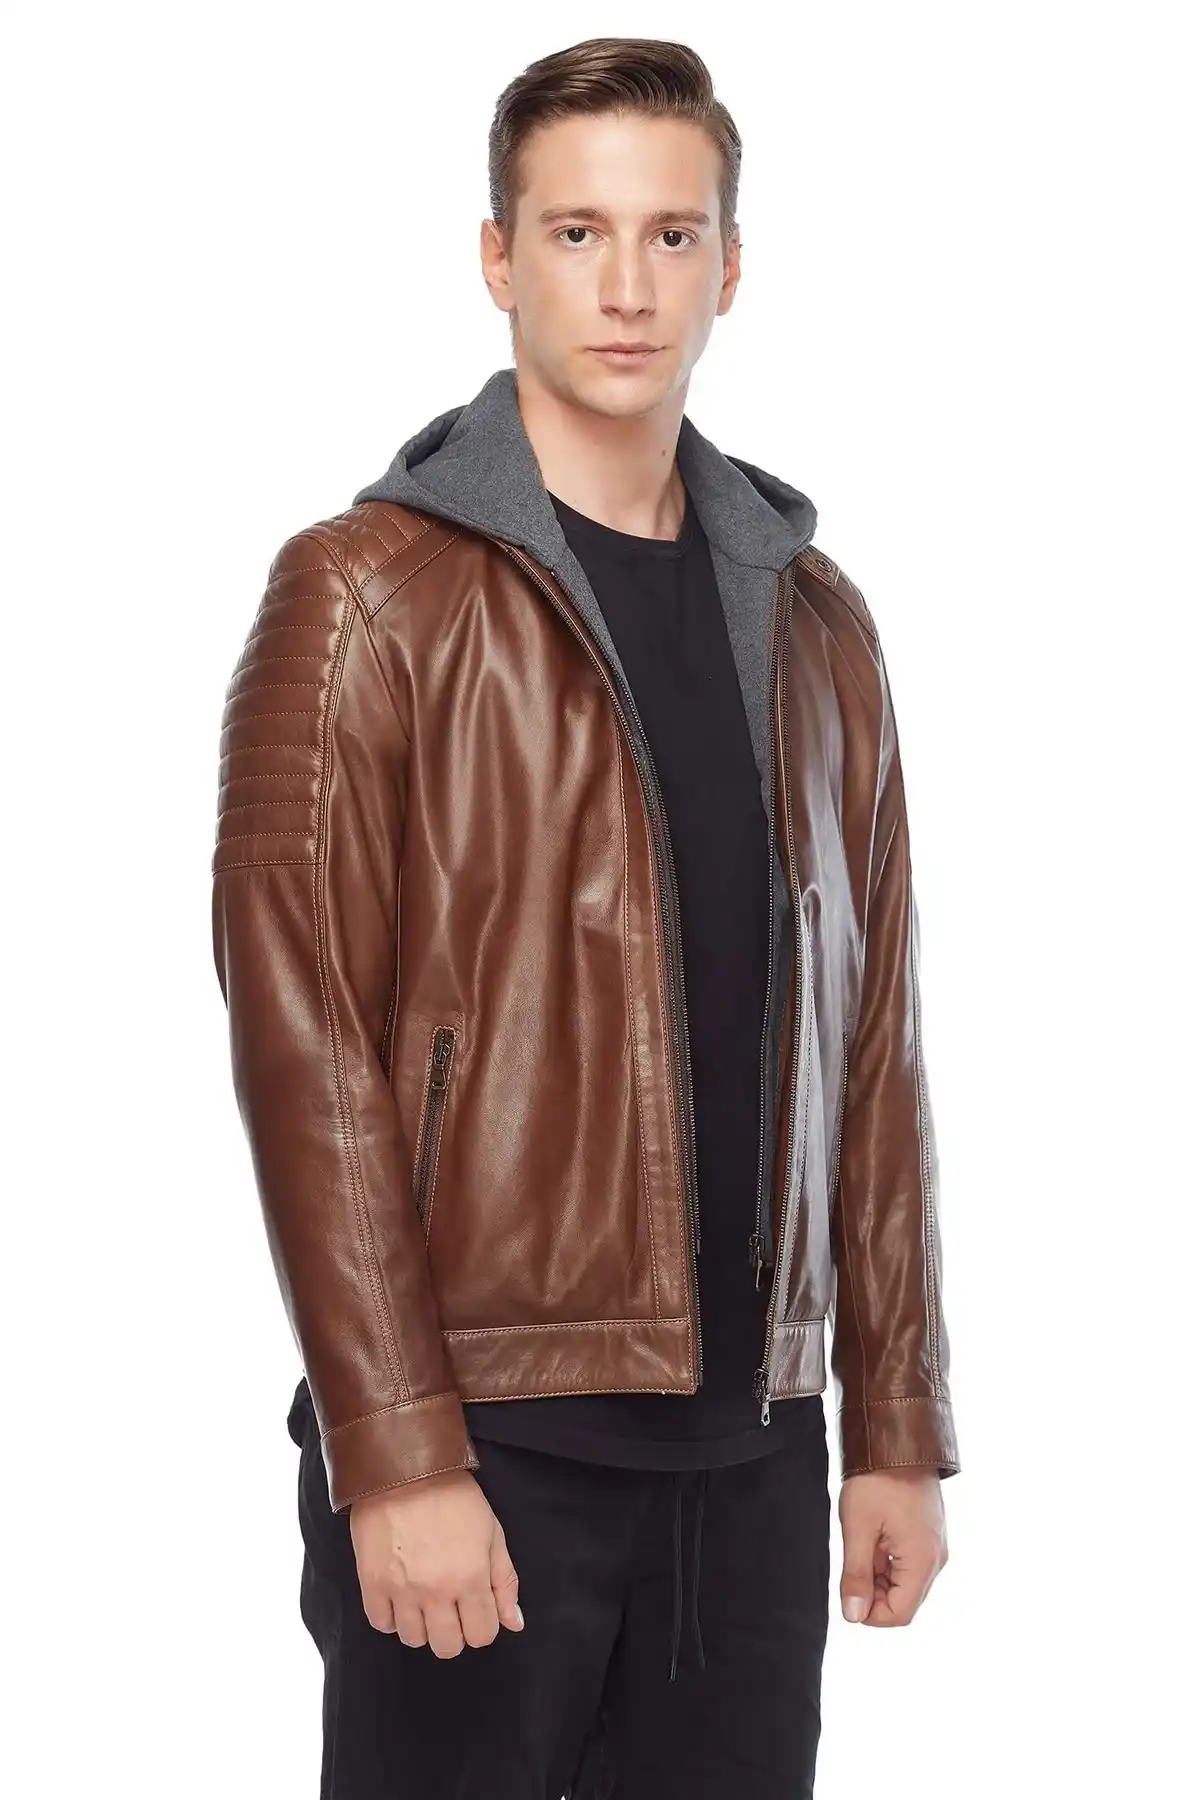 Brown Hooded Men’s Leather Jacket